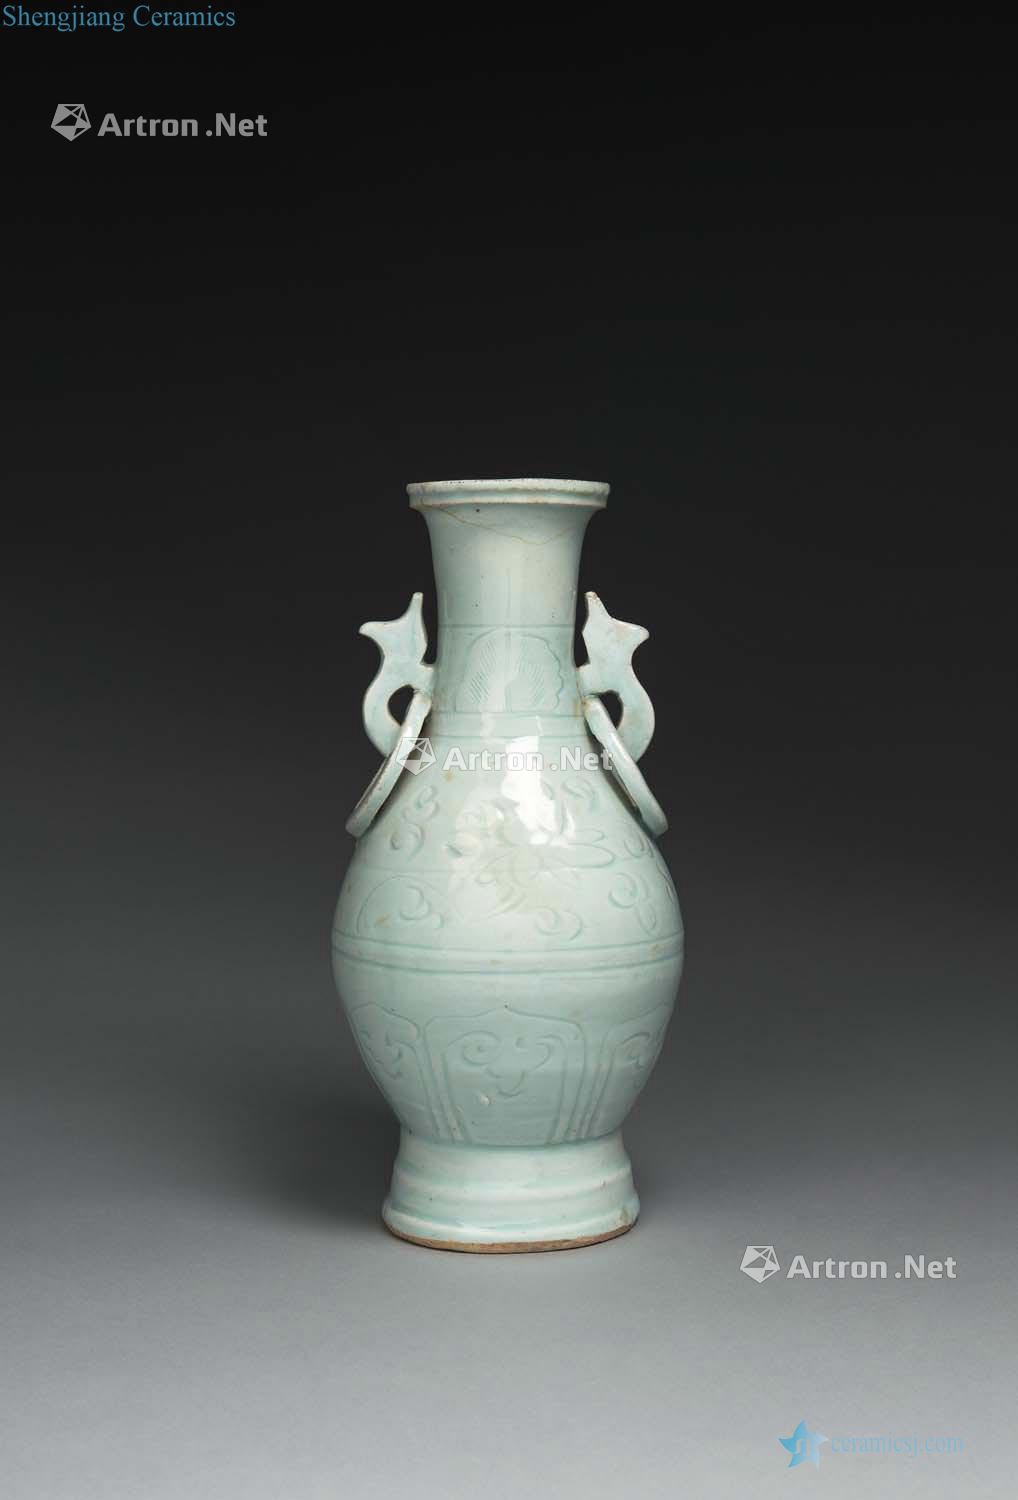 The 14th century yuan dynasty Shadow blue bottle